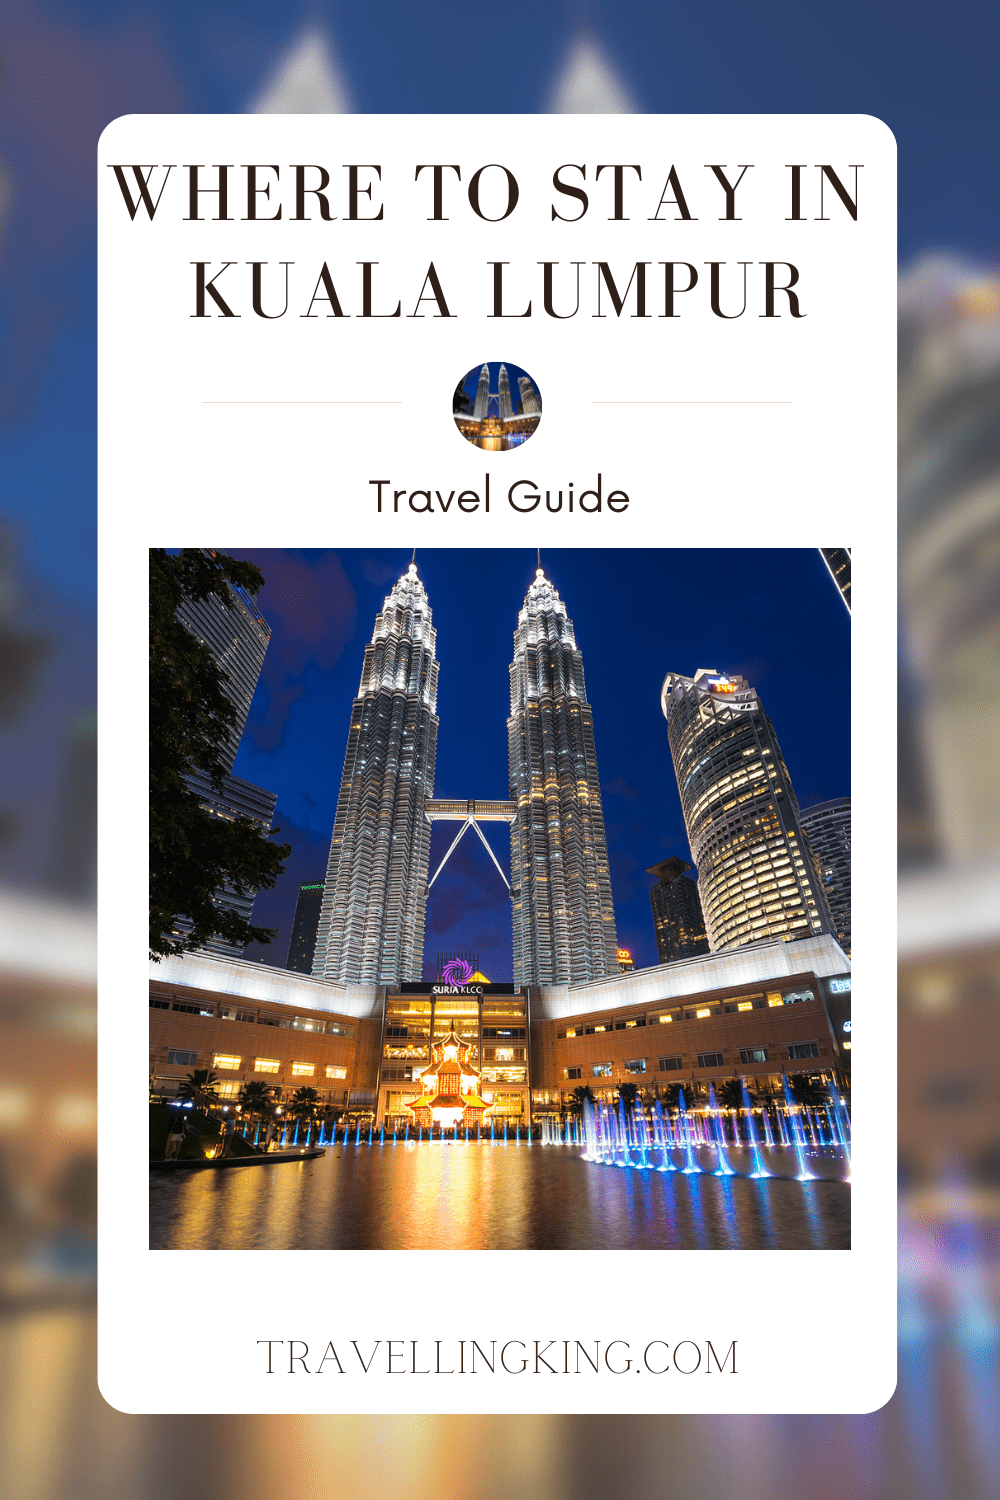 Where to stay in Kuala Lumpur